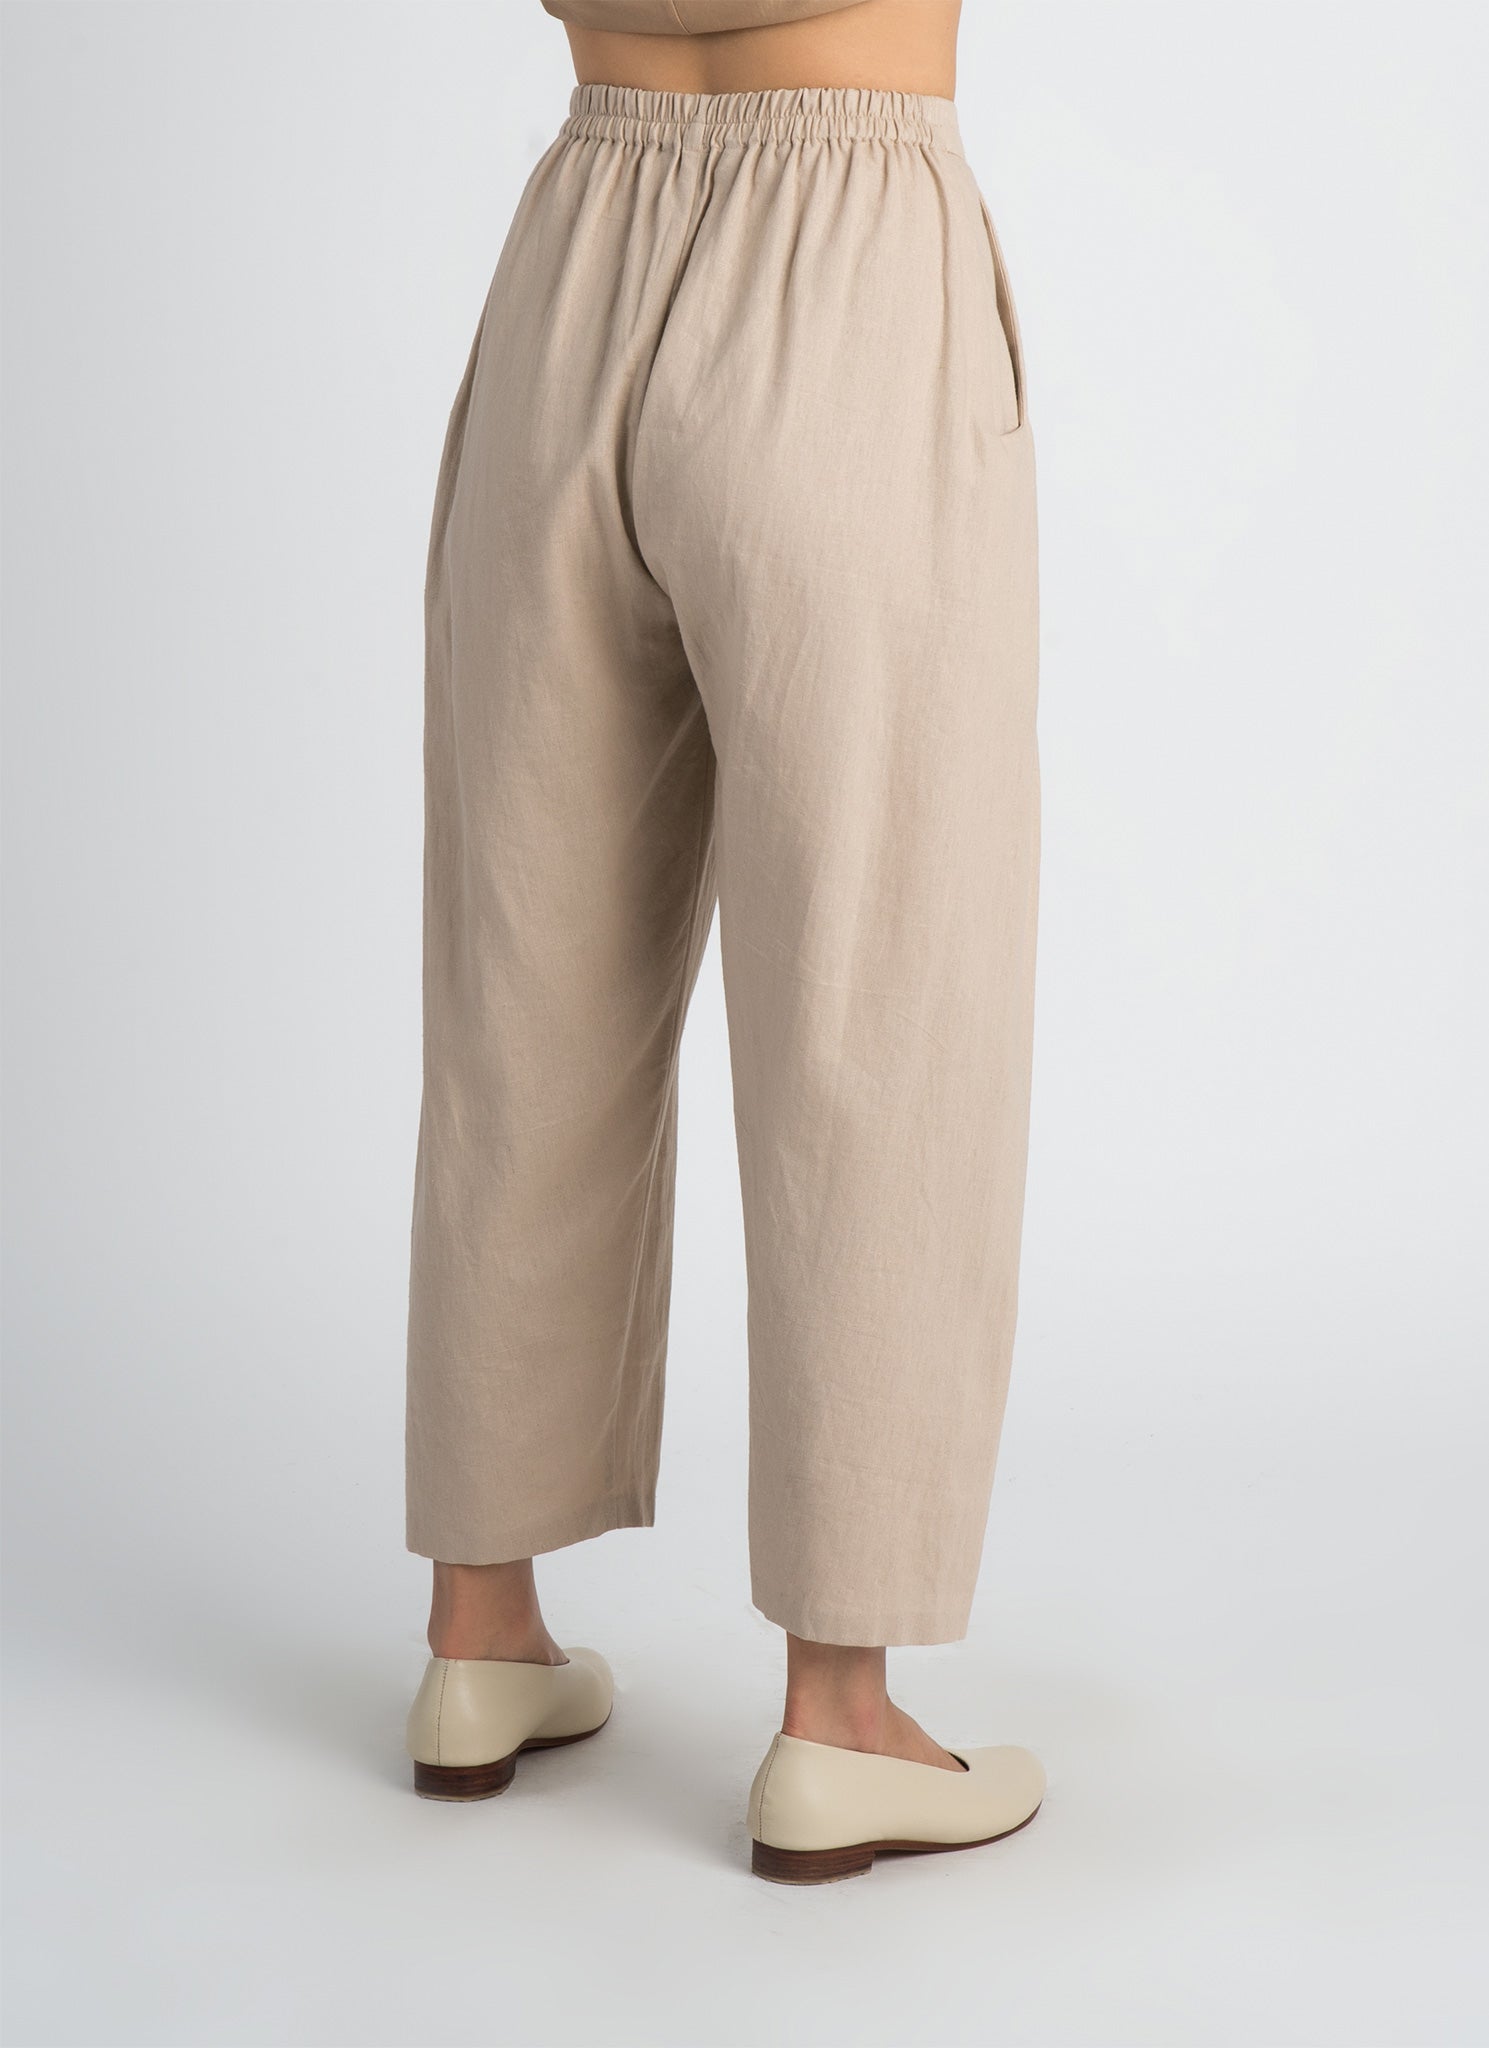 Mens New Jeans EM504 Stone Cream Tapered Leg Pants Bargain Trousers | eBay